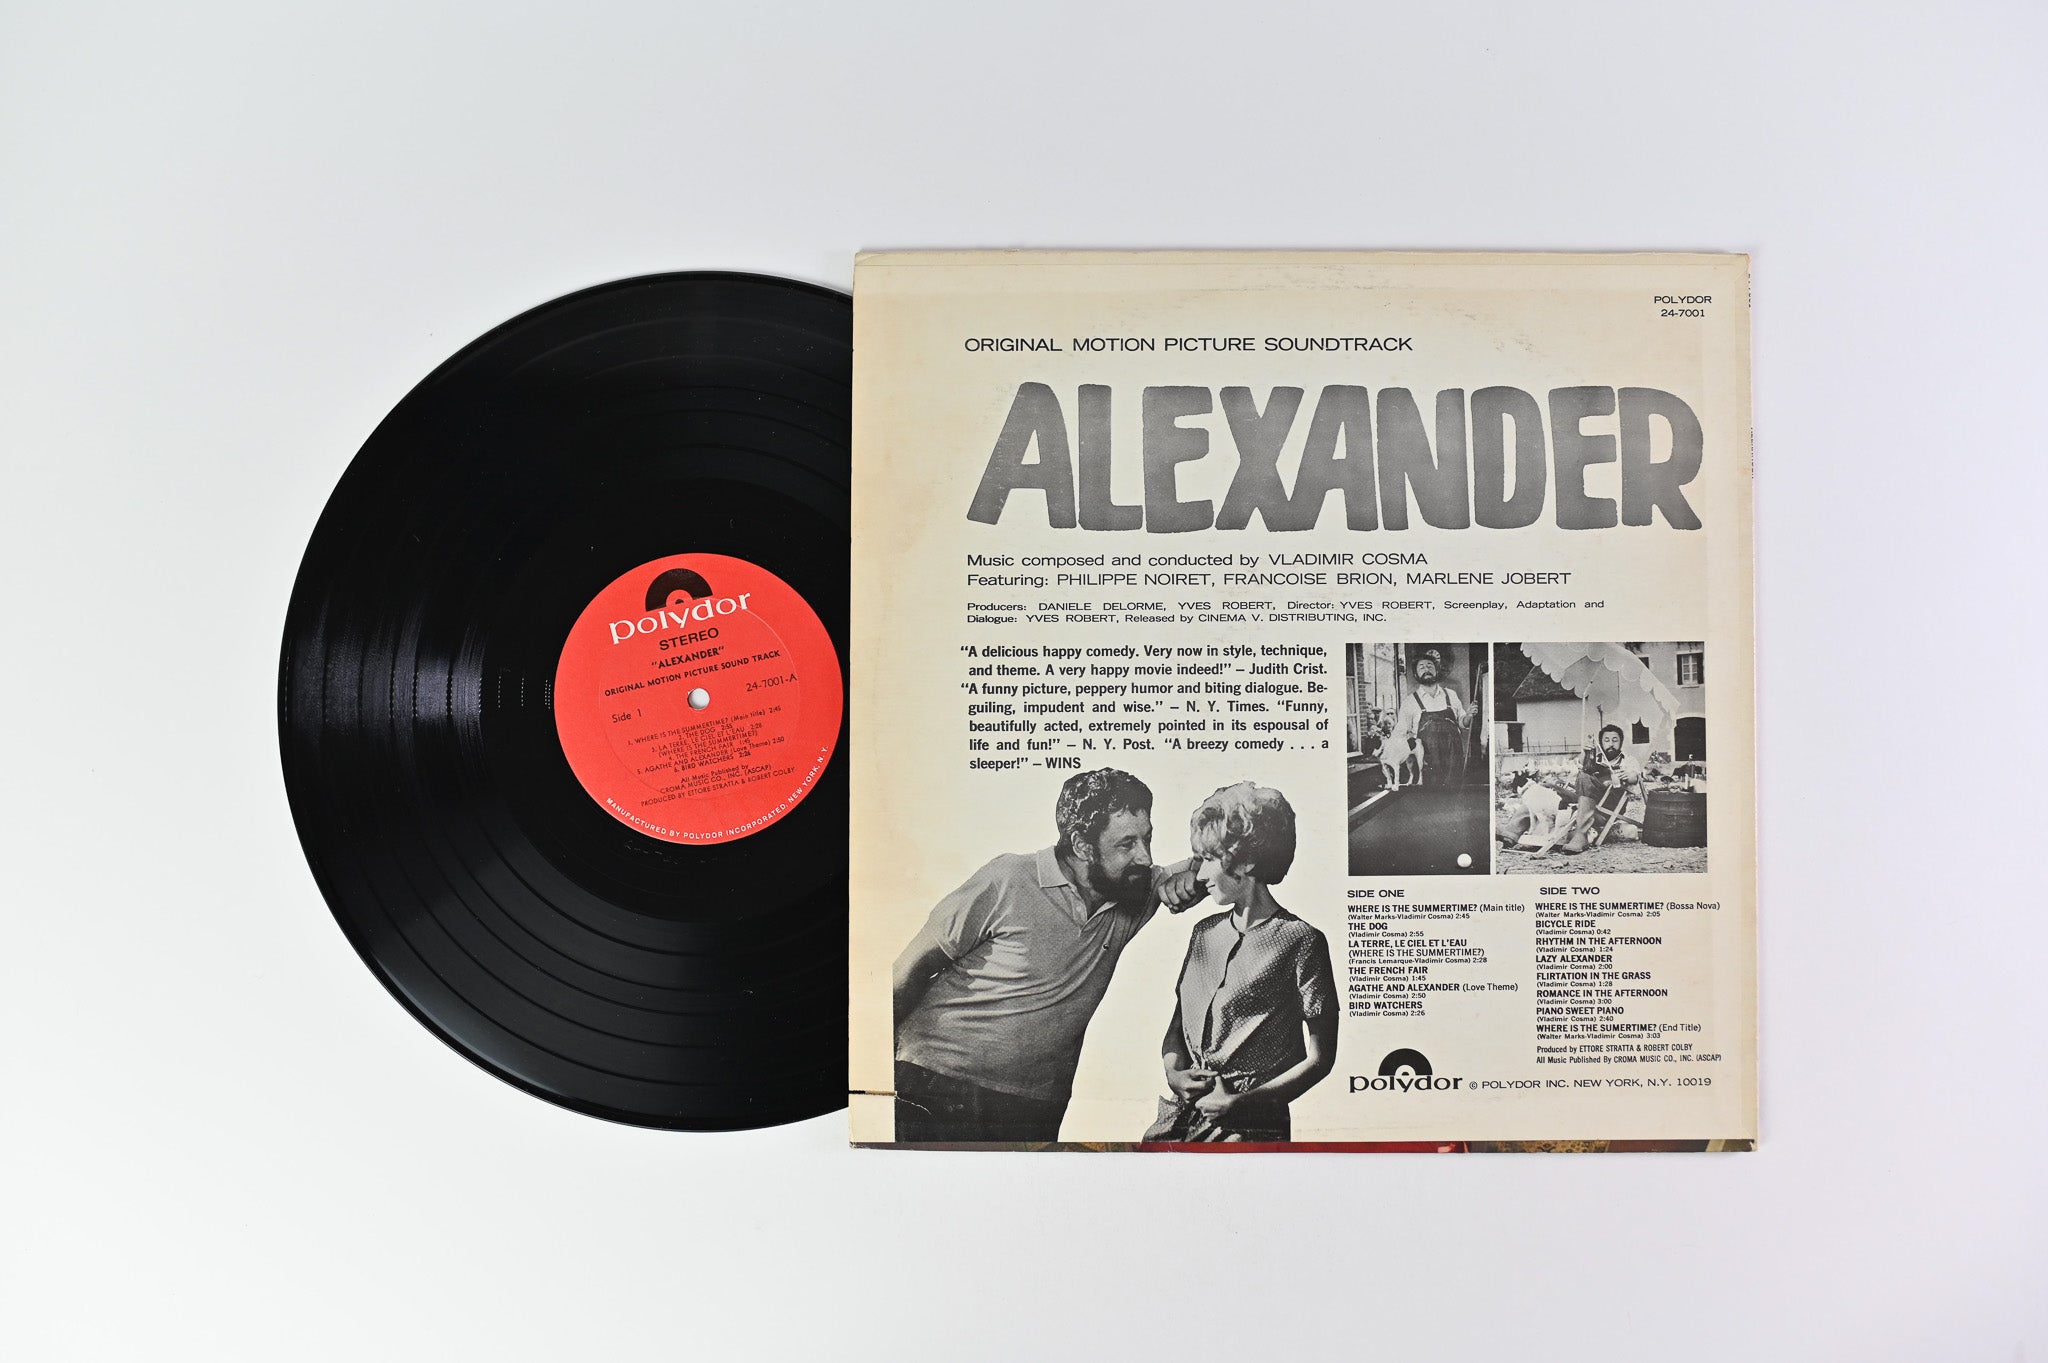 Vladimir Cosma - Alexander (Original Motion Picture Soundtrack) on Polydor